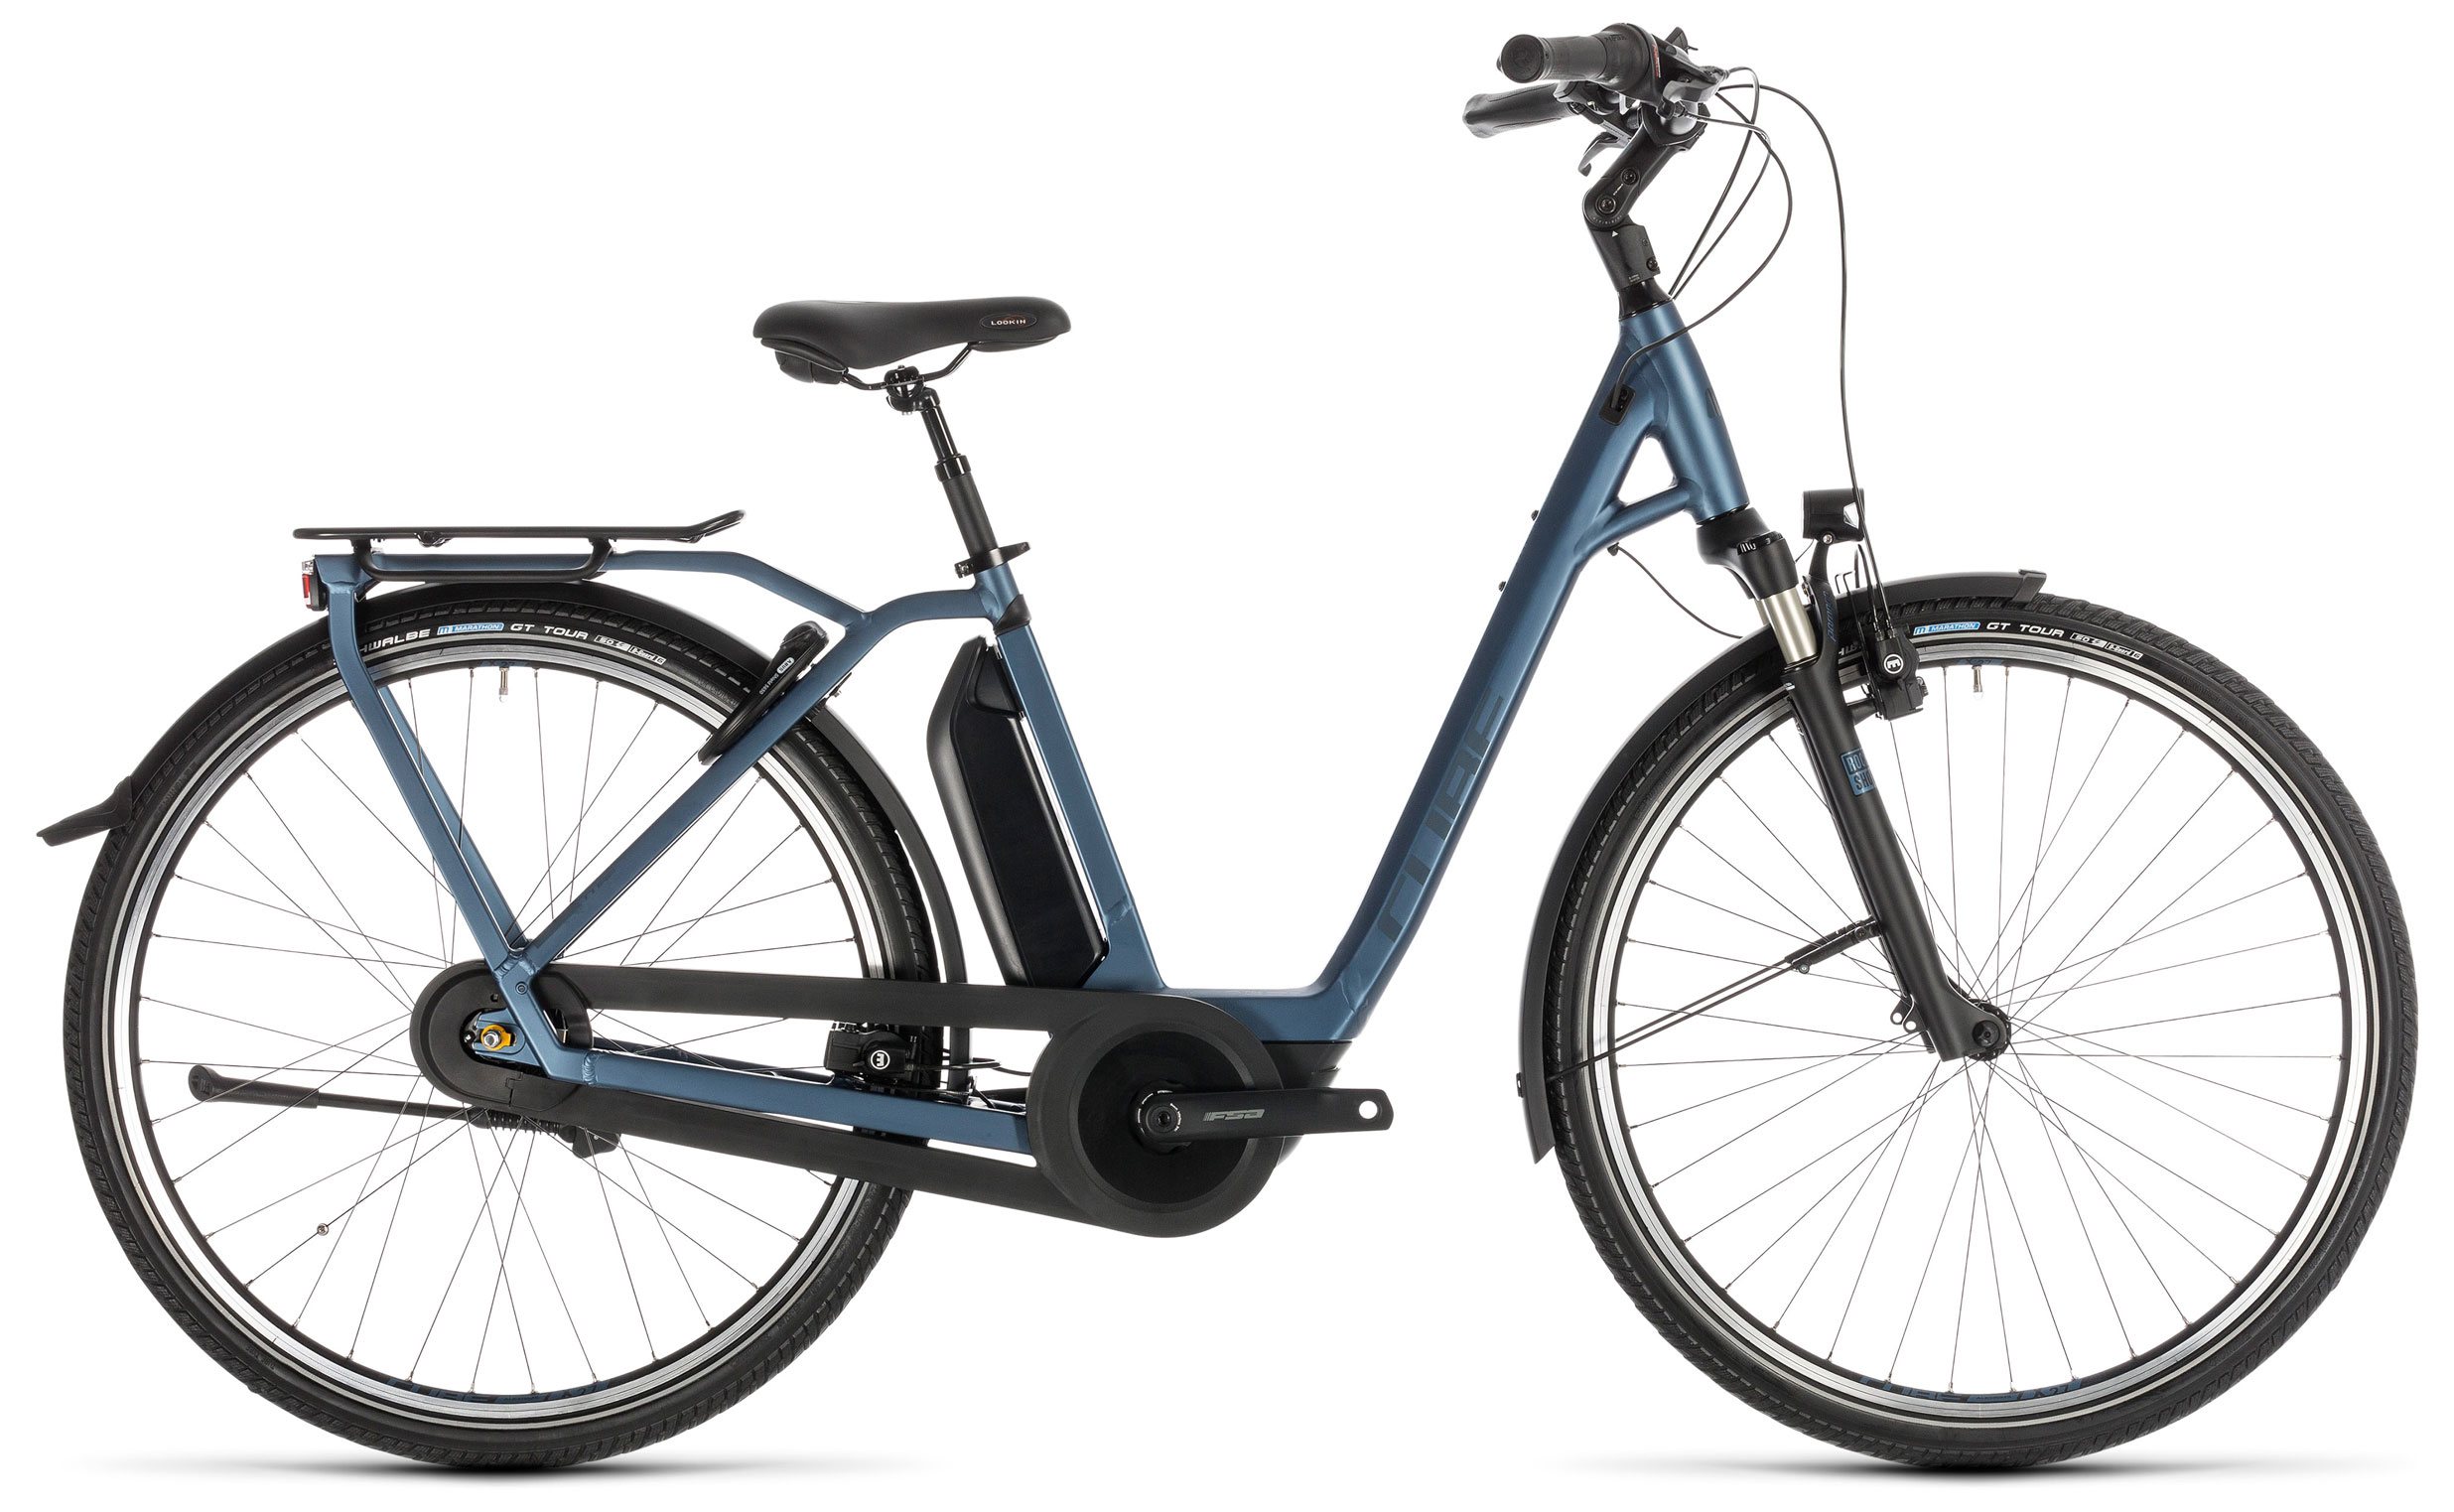  Велосипед трехколесный детский велосипед Cube Town Hybrid EXC RT 400 Easy Entry 2019